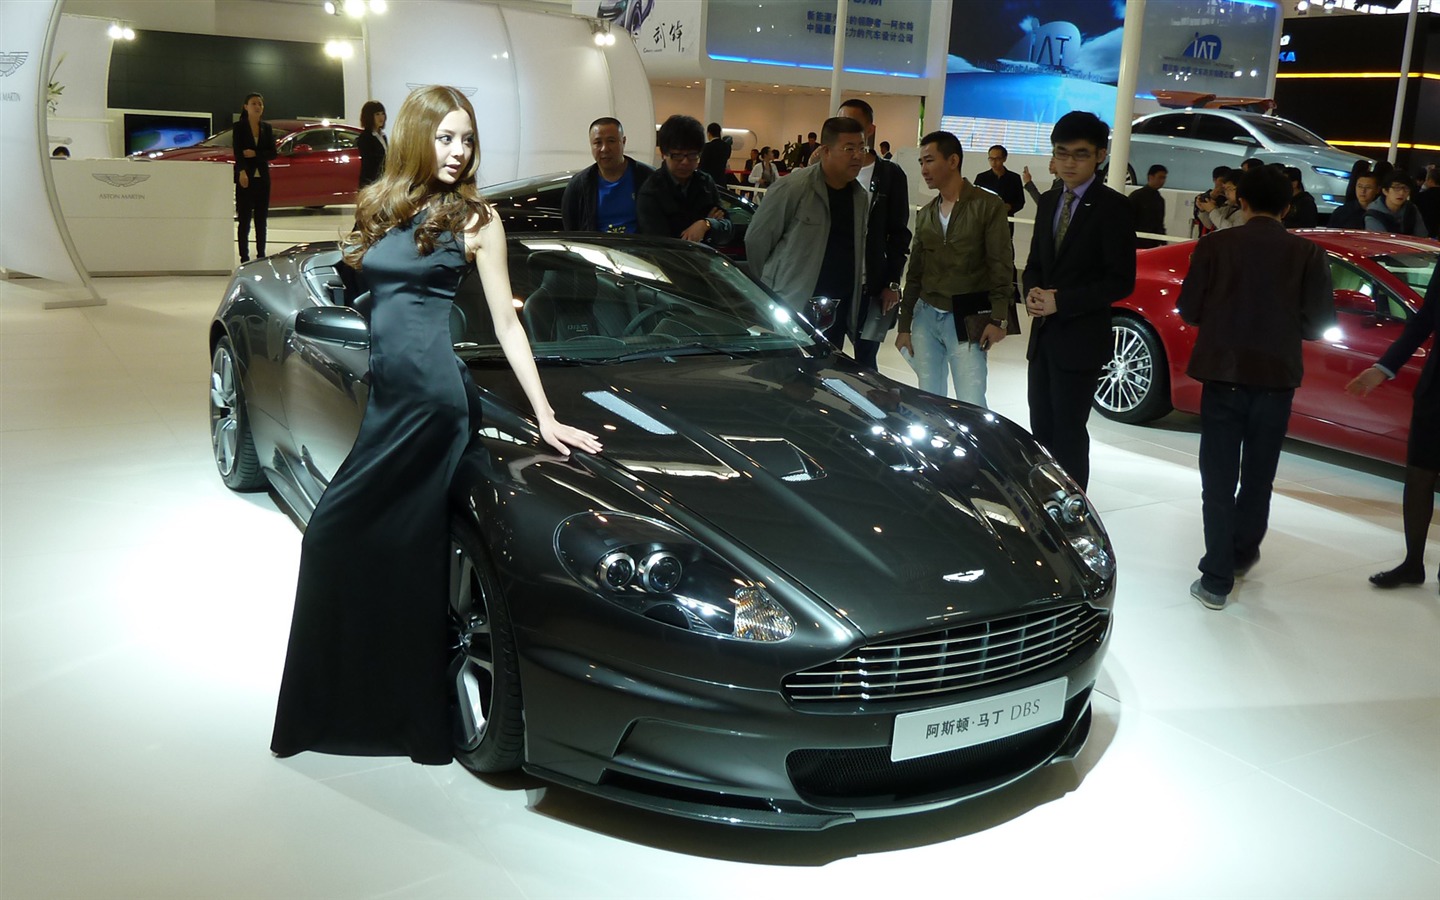 2010 Beijing Auto Show (Gemini Dream Works) #2 - 1440x900